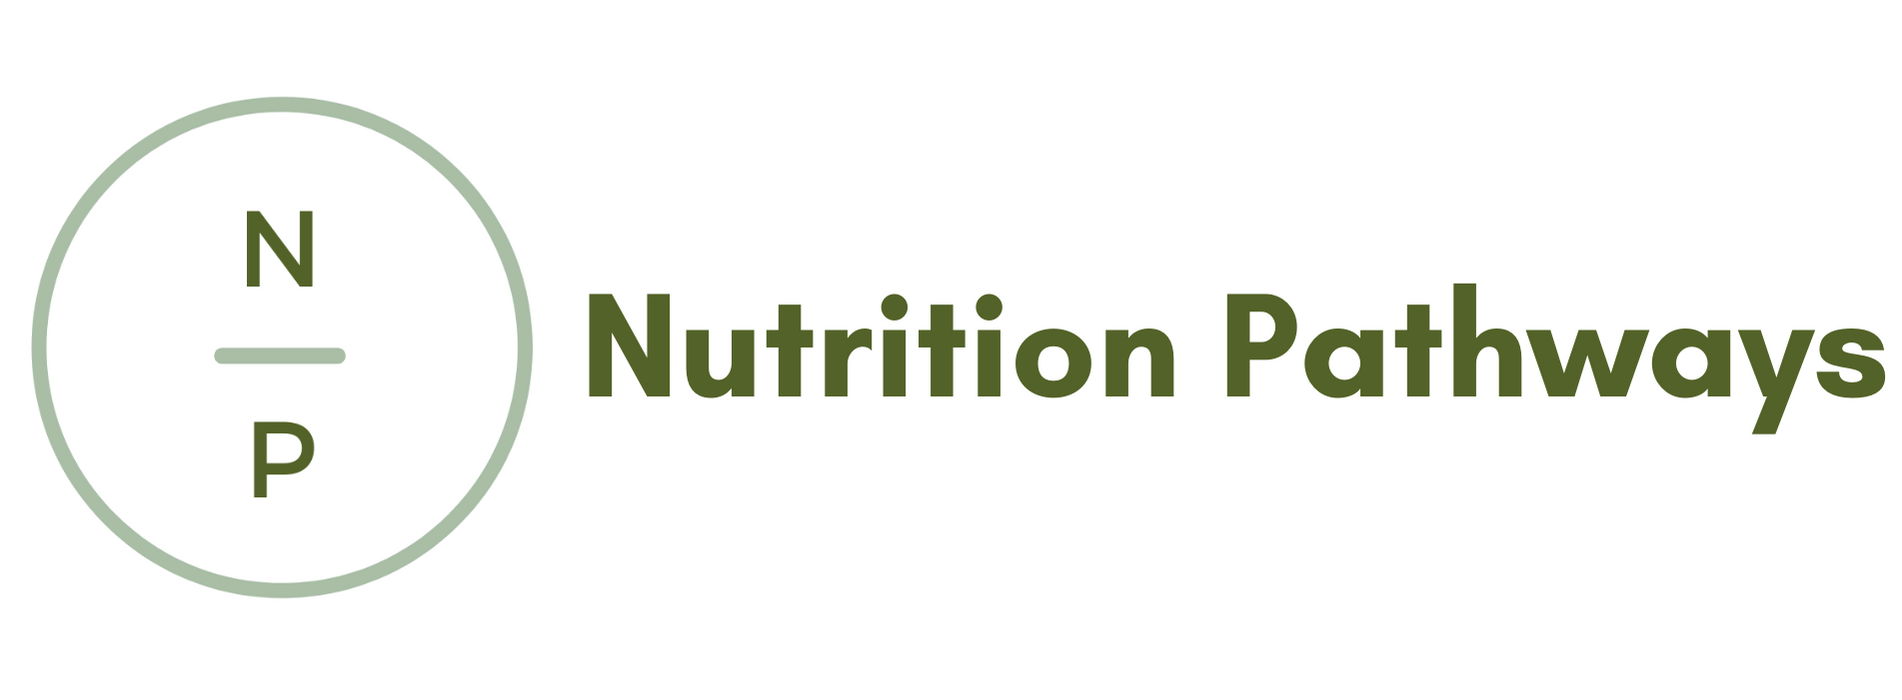 Nutrition Pathways logo horizontal